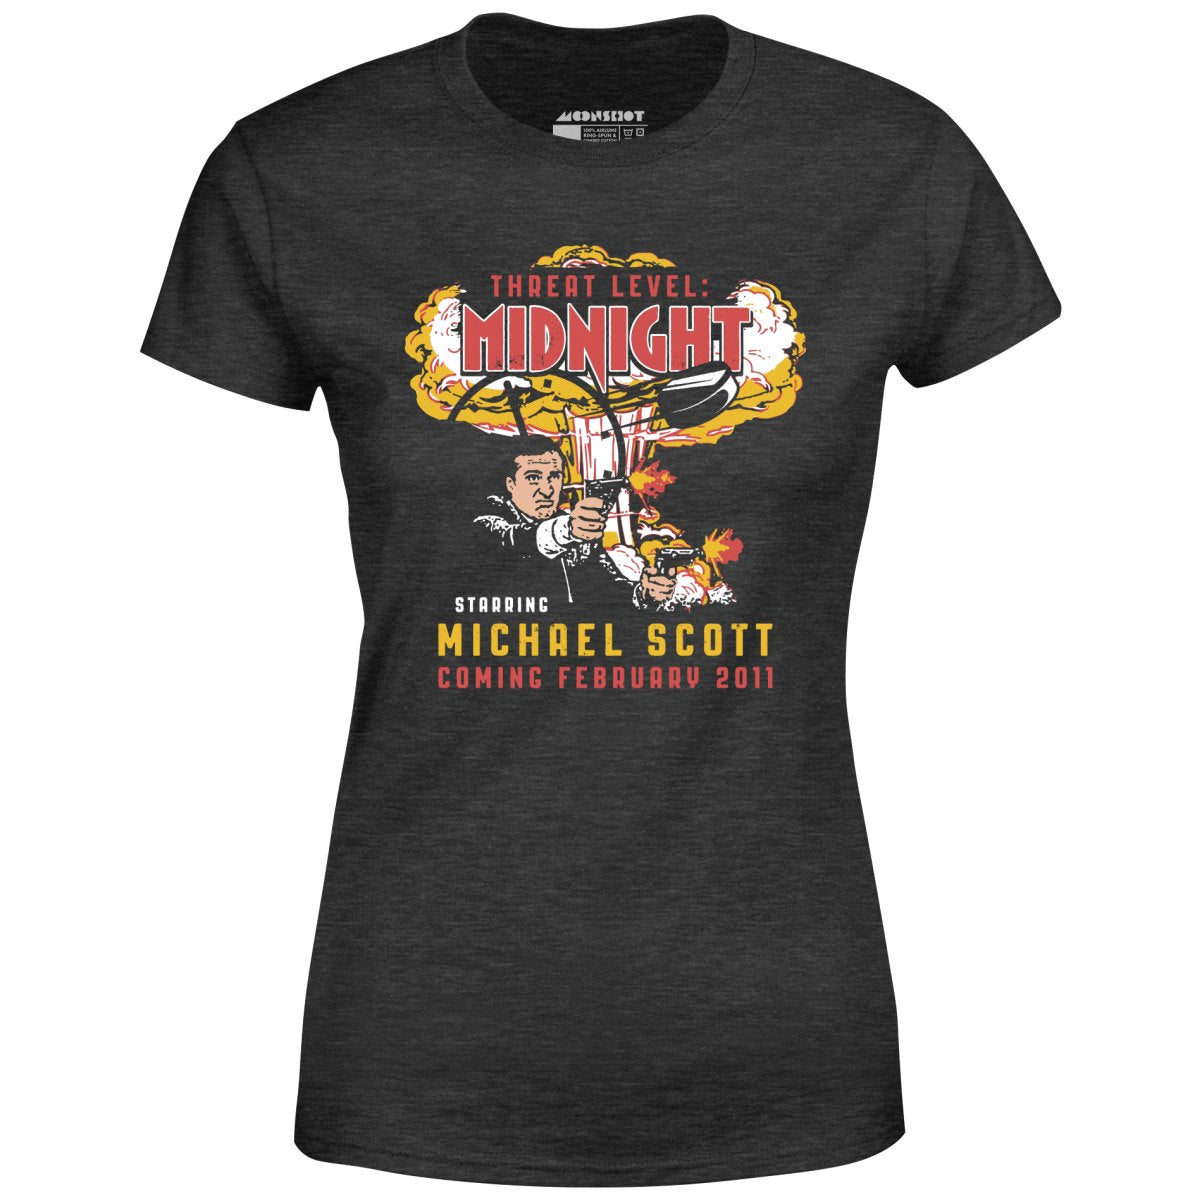 Threat Level Midnight - Women's T-Shirt